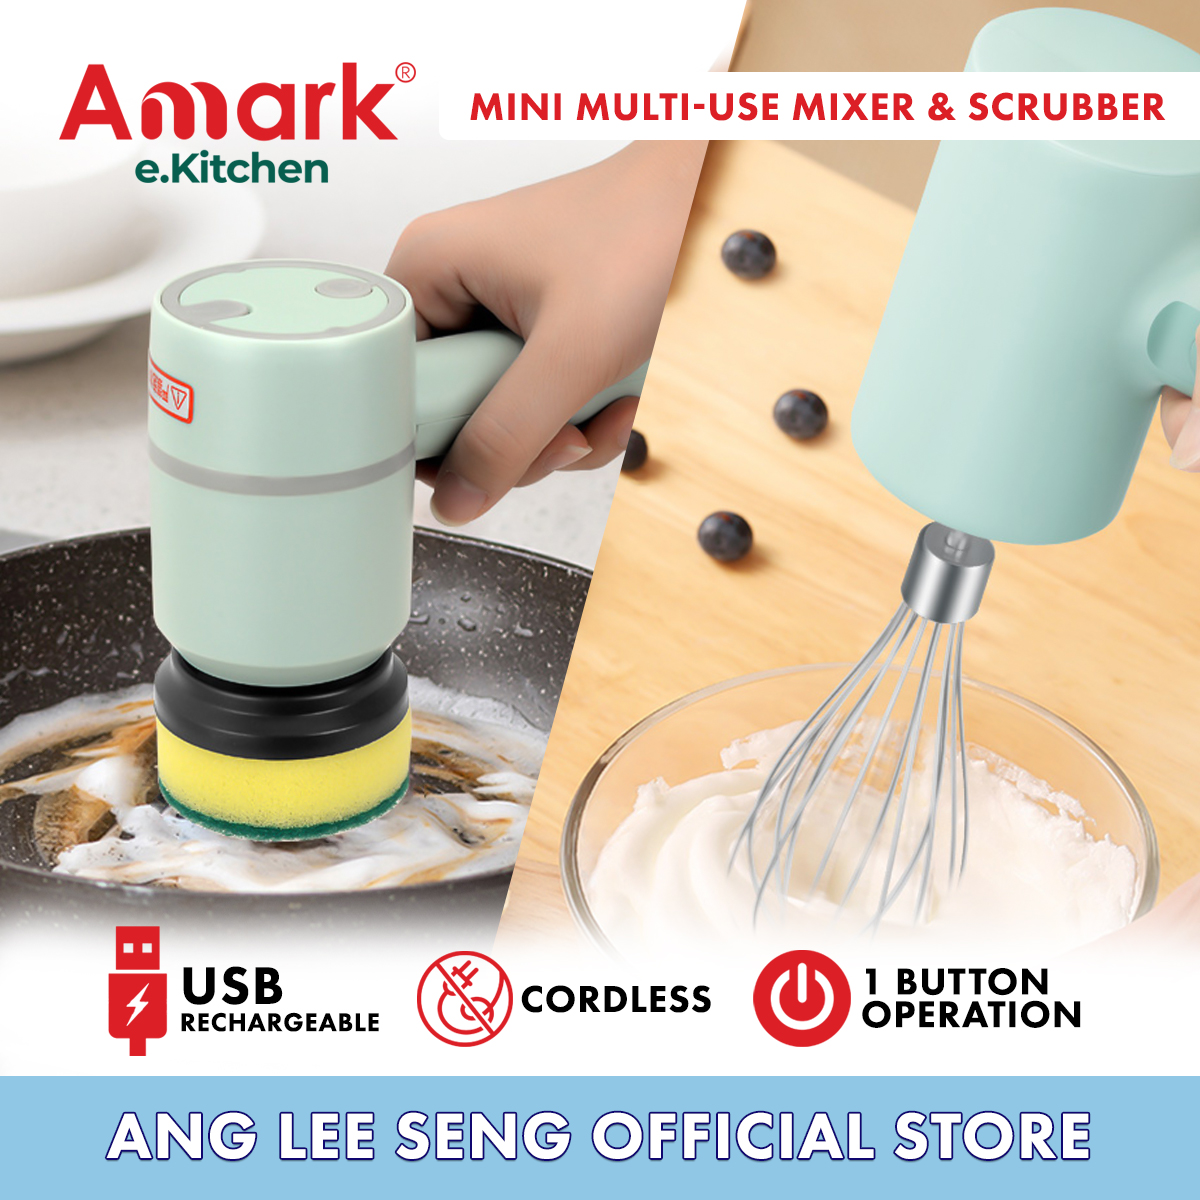 Amark e.Kitchen Cordless USB-Rechargeable Multi-Use Mixer & Scrubber - 5pc Attachments Set